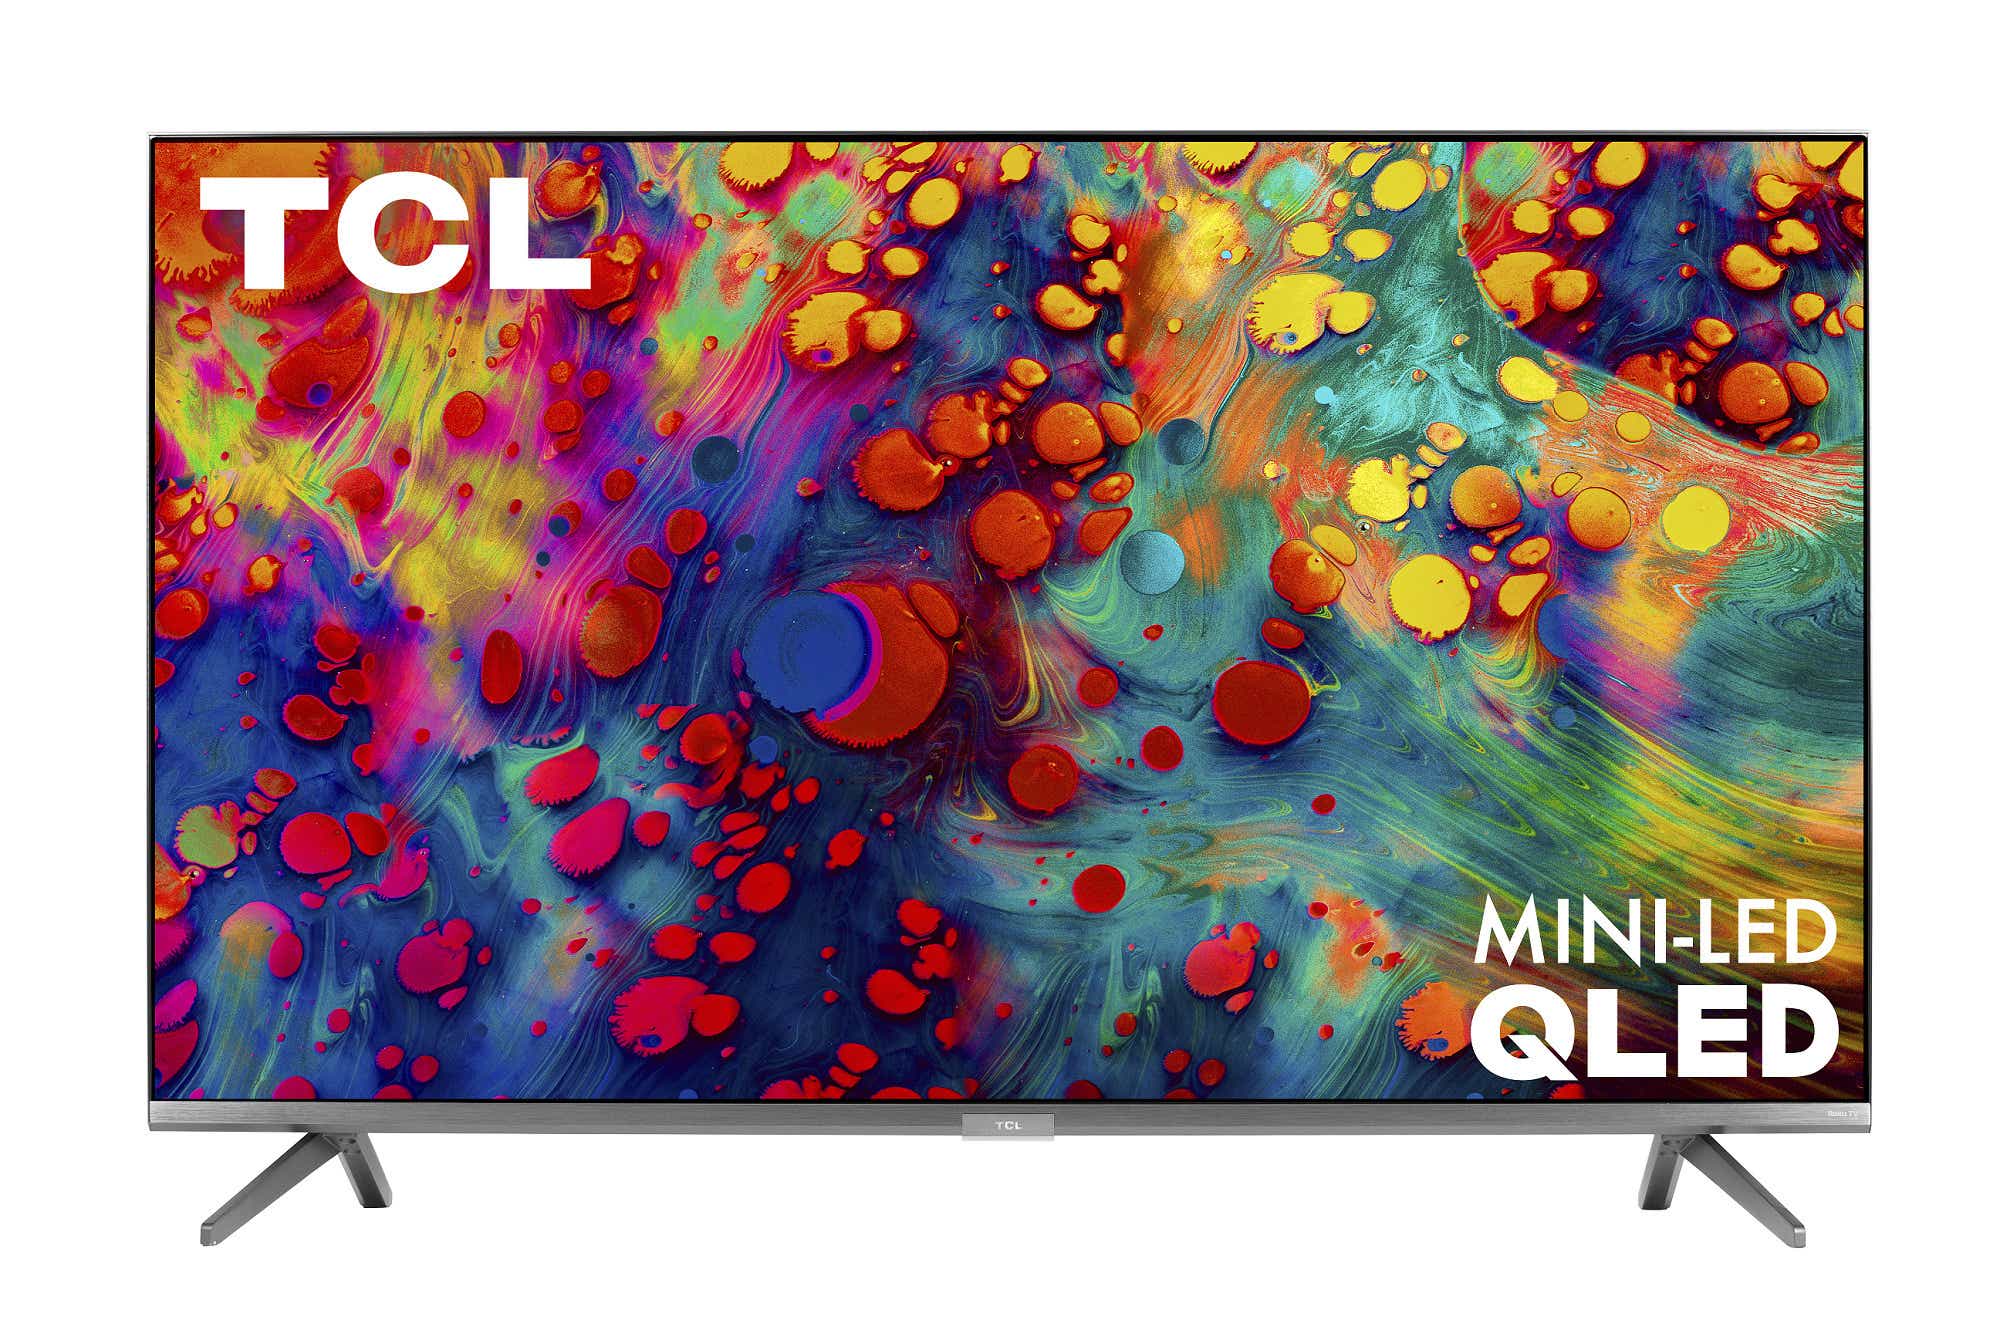 TCL 6-series (2020) 4K UHD  quantum dot TV (55-inch class, model 55R635)